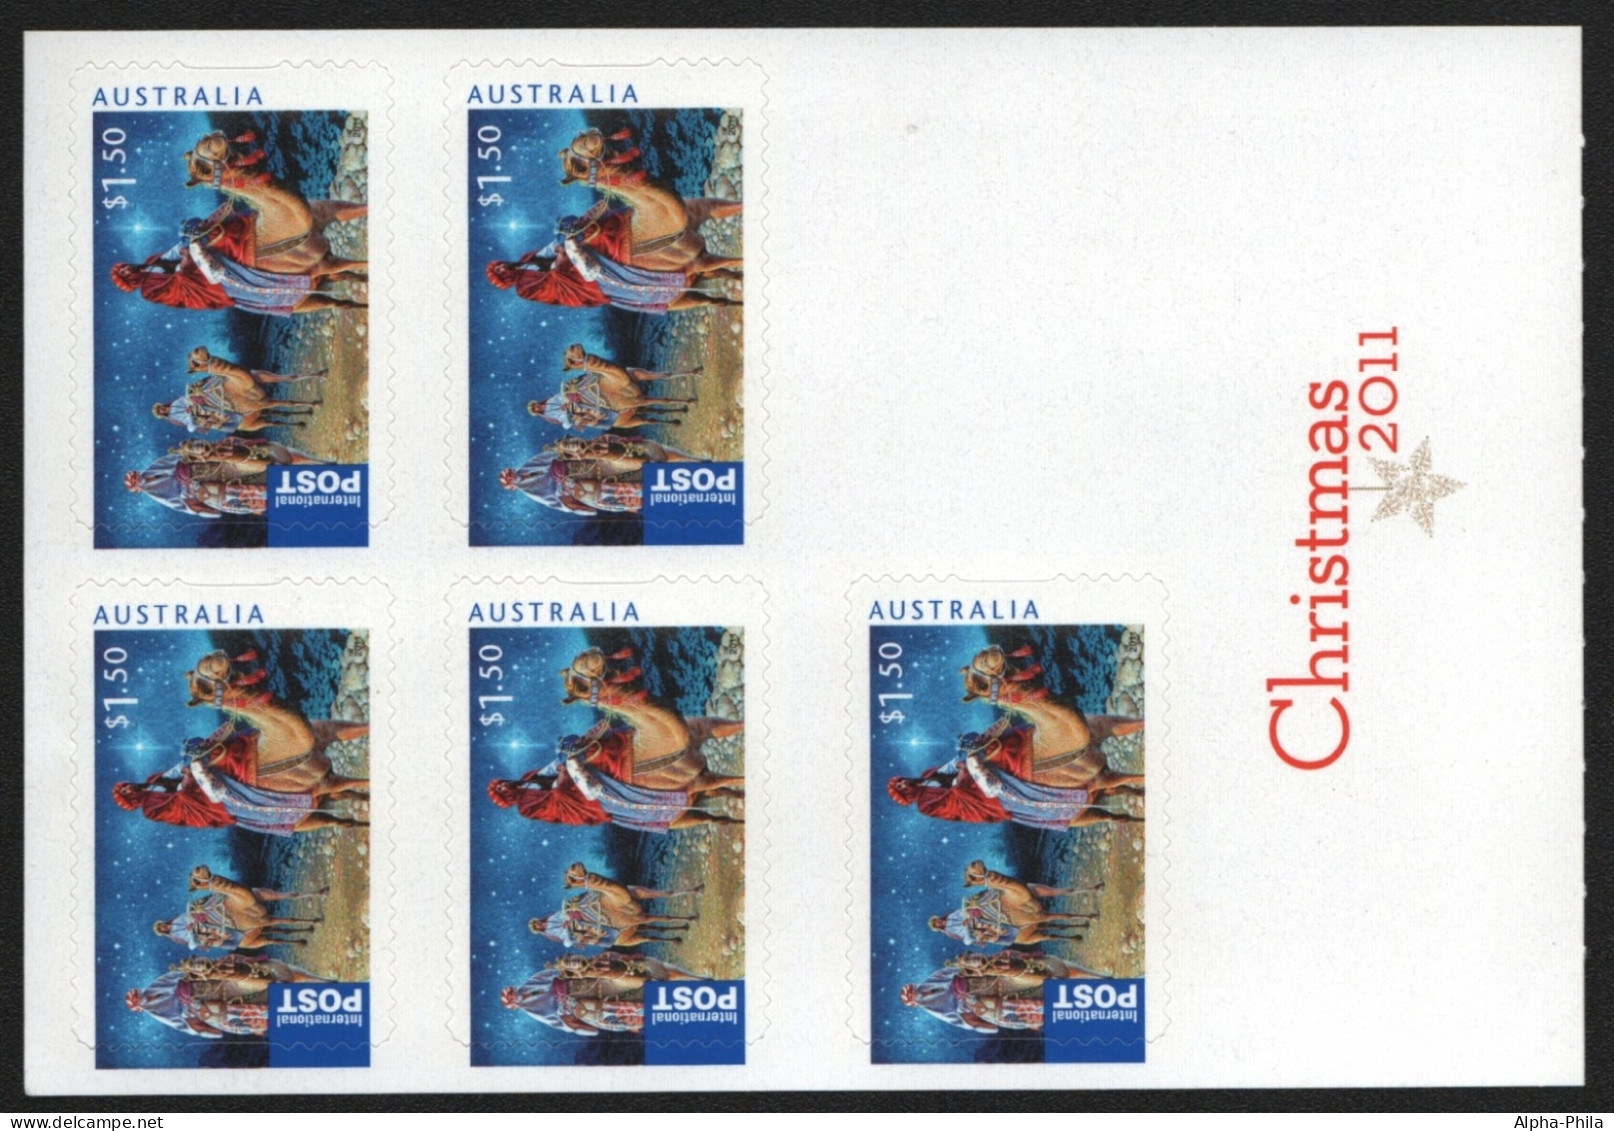 Australien 2011 - Mi-Nr. 3644 I BA ** - MNH - Folienblatt - Weihnachten / X-mas - Mint Stamps